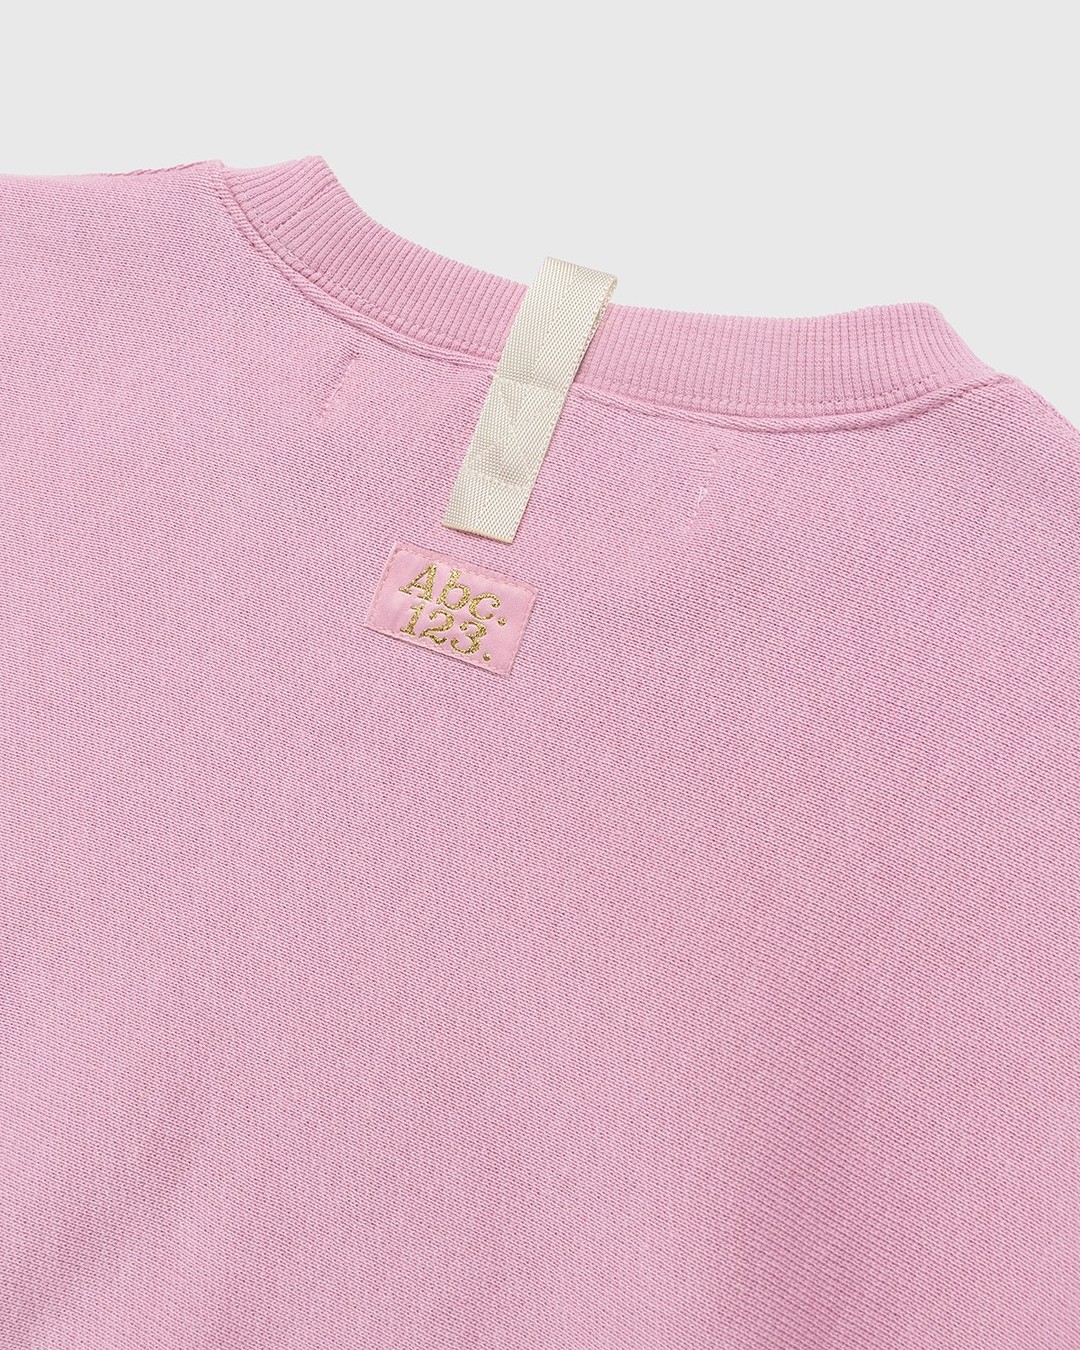 Abc. – French Terry Crewneck Sweatshirt Morganite - Sweatshirts - Pink - Image 5